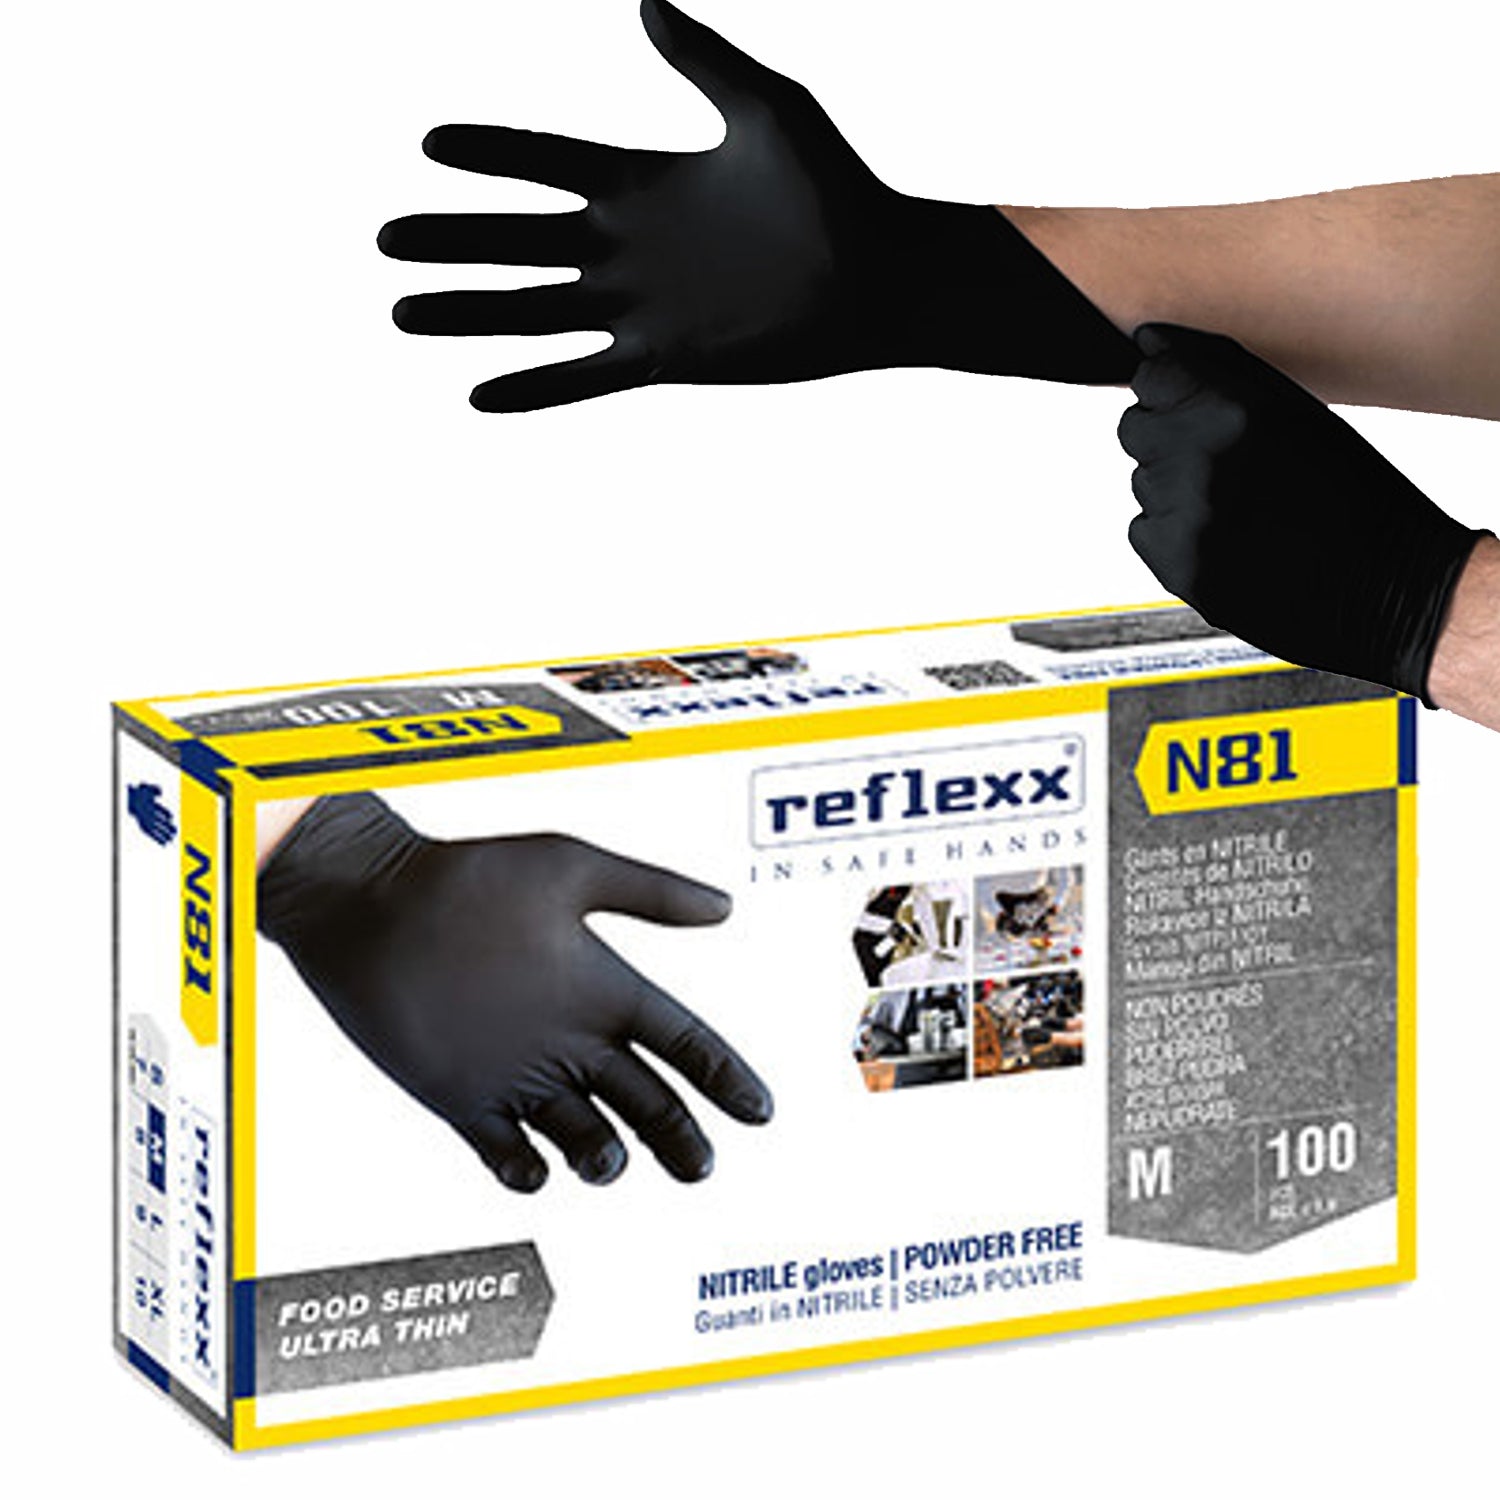 Reflexx N 81 guanti monouso in nitrile nero